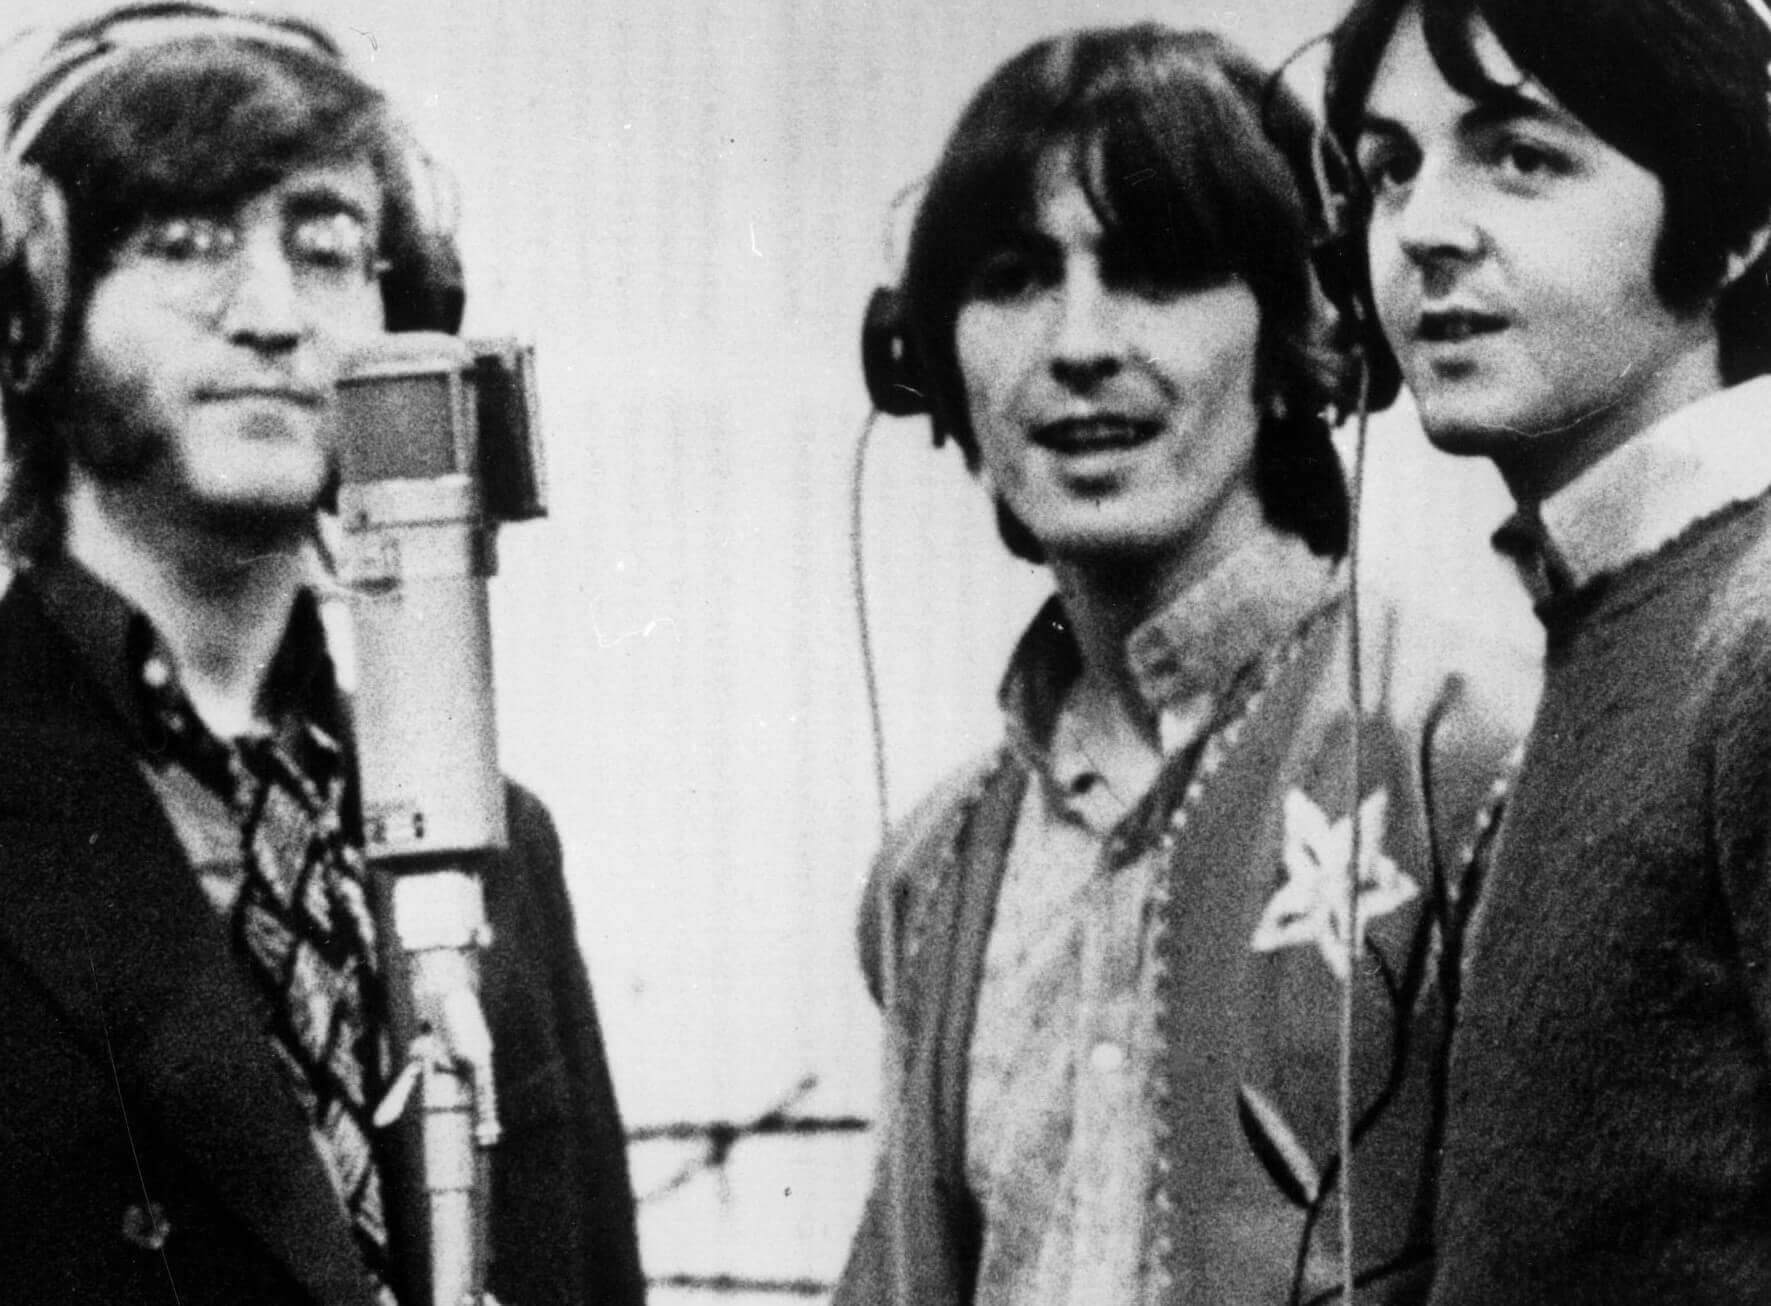 The Beatles' John Lennon, George Harrison, and Paul McCartney